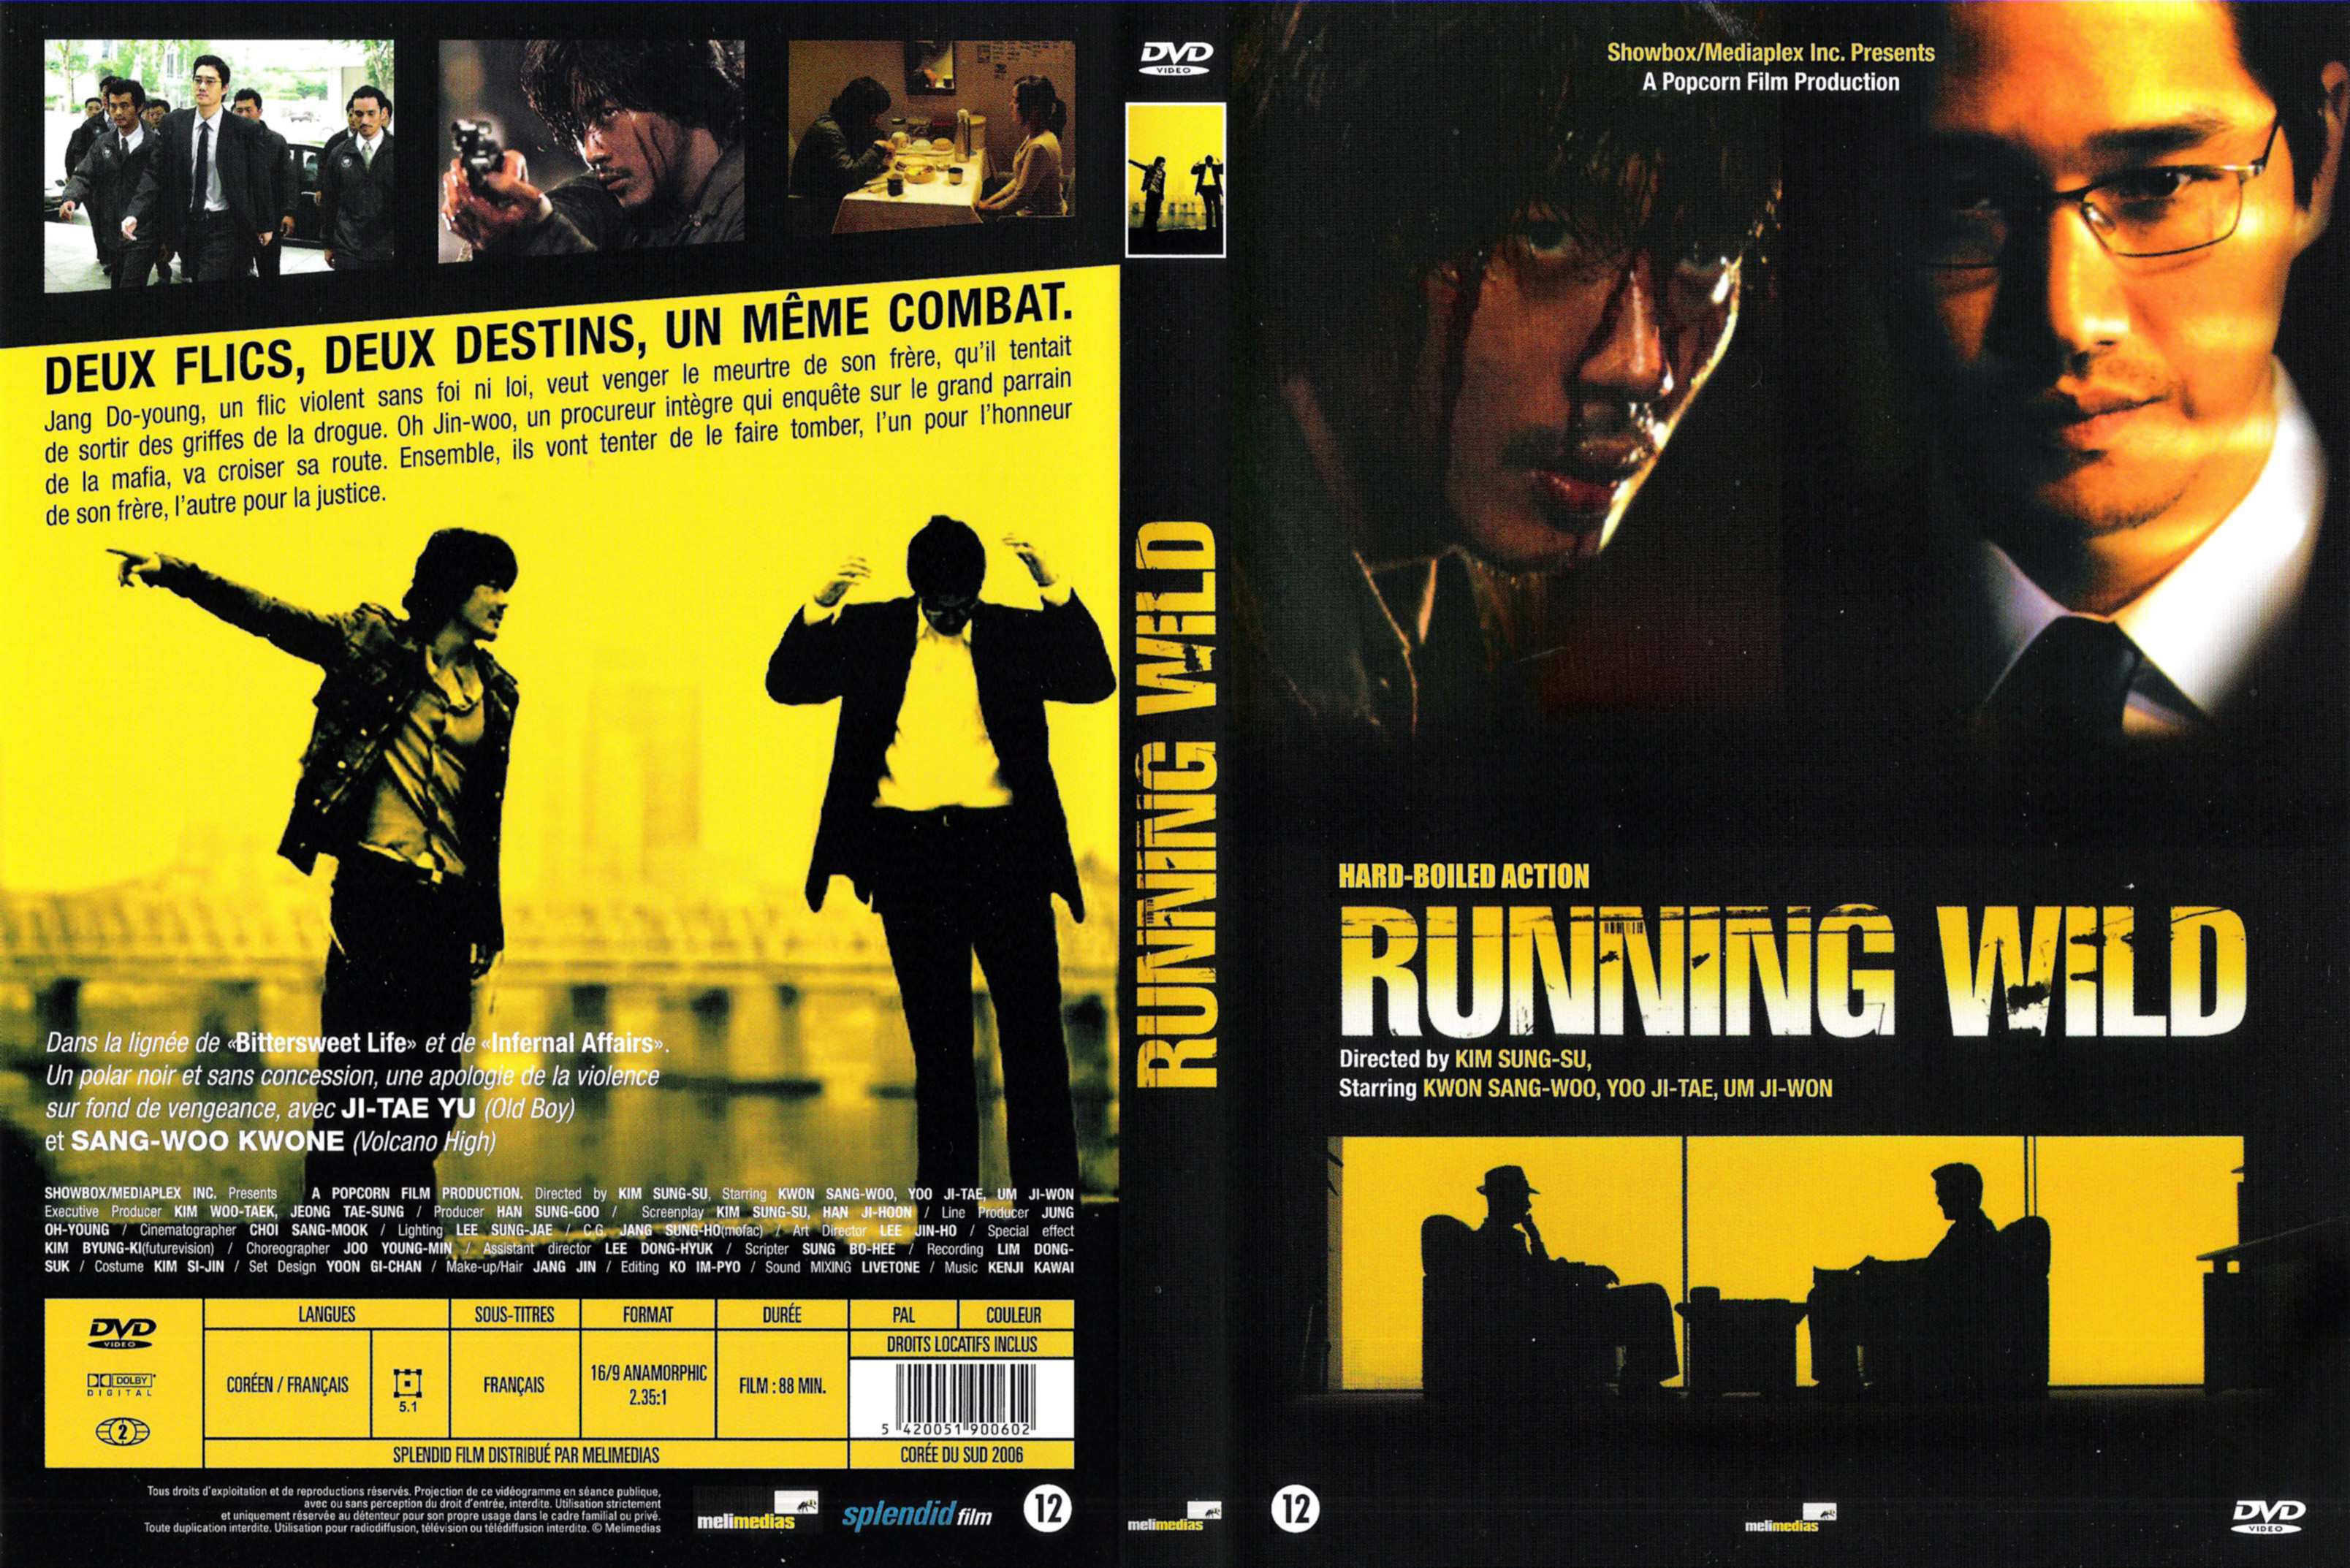 Jaquette DVD Running wild (2006)